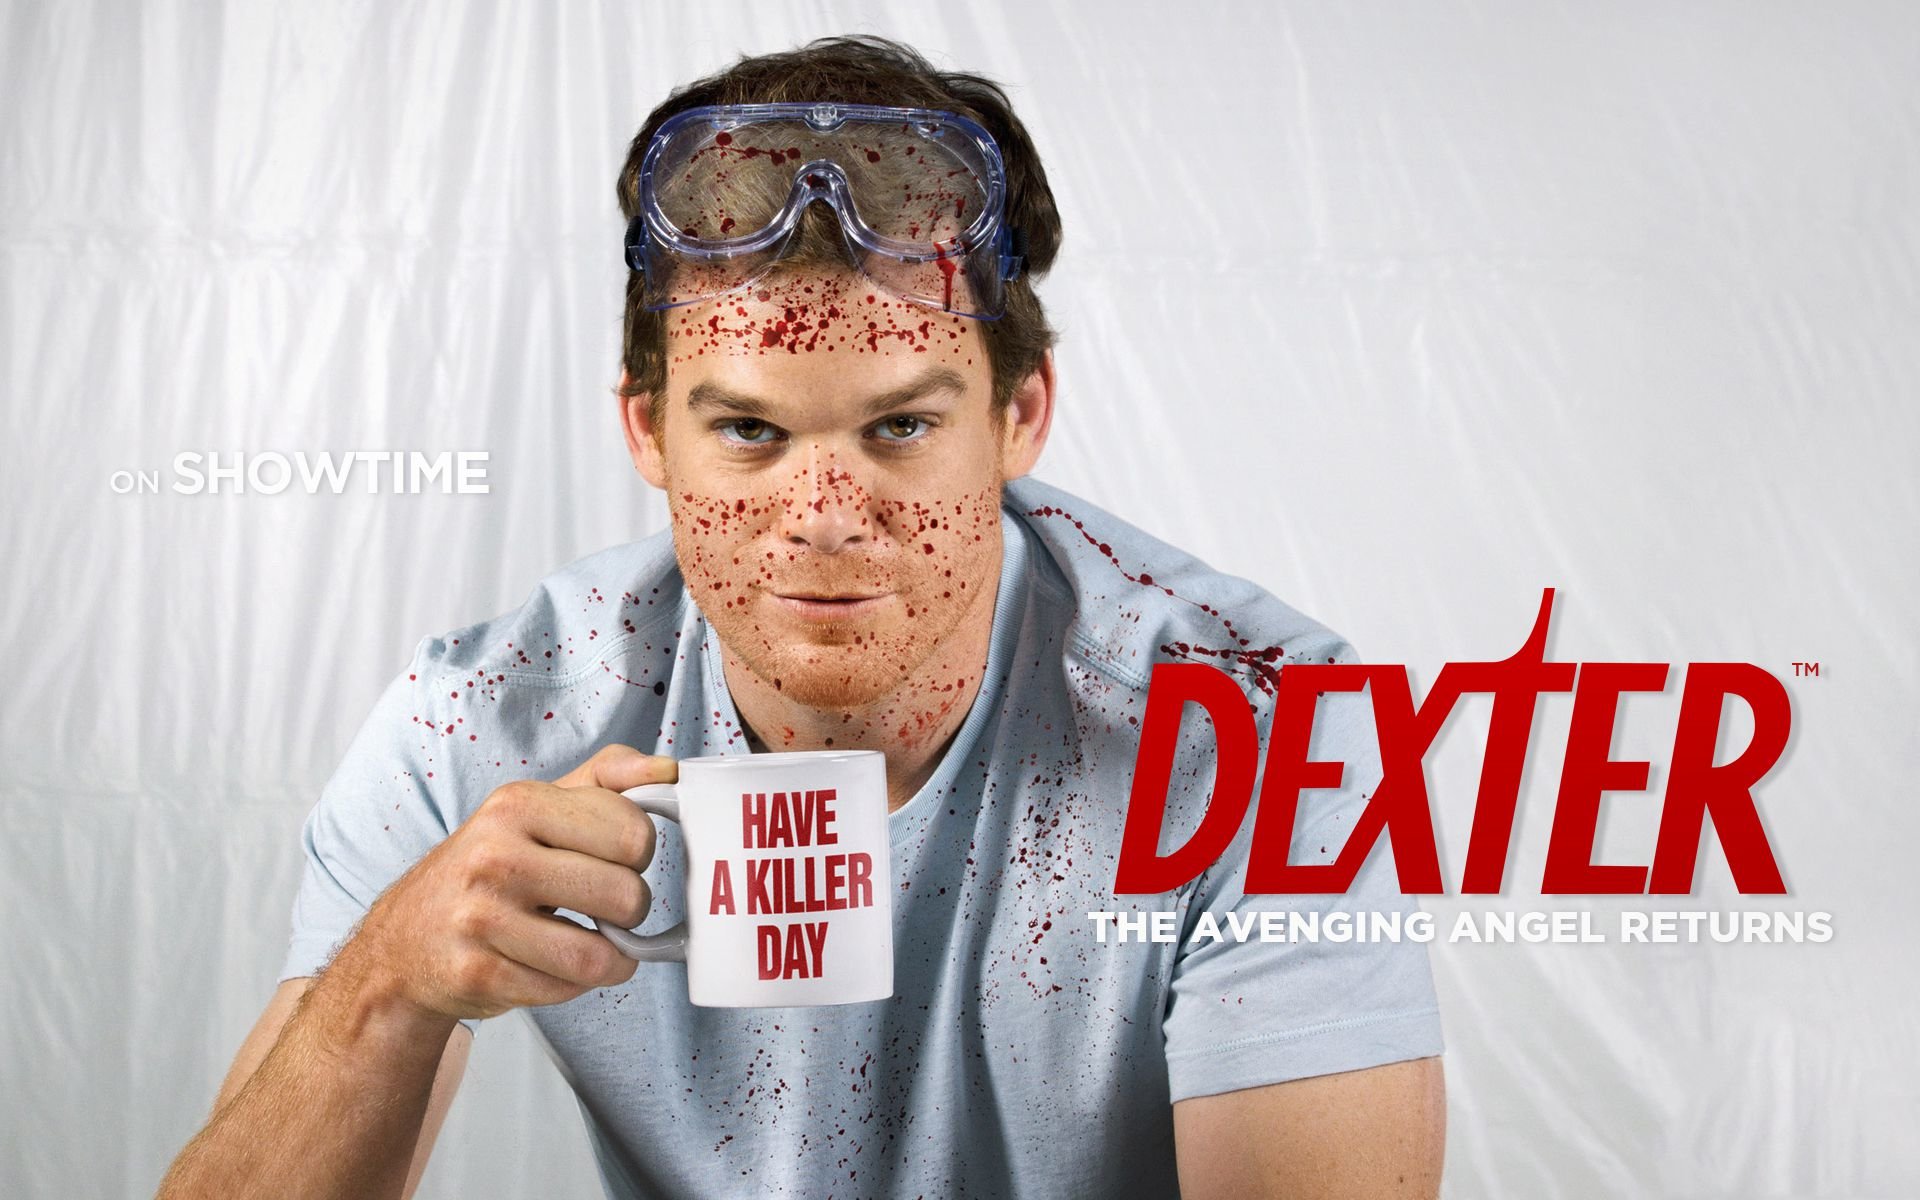 Dexter wallpapers HD for desktop backgrounds